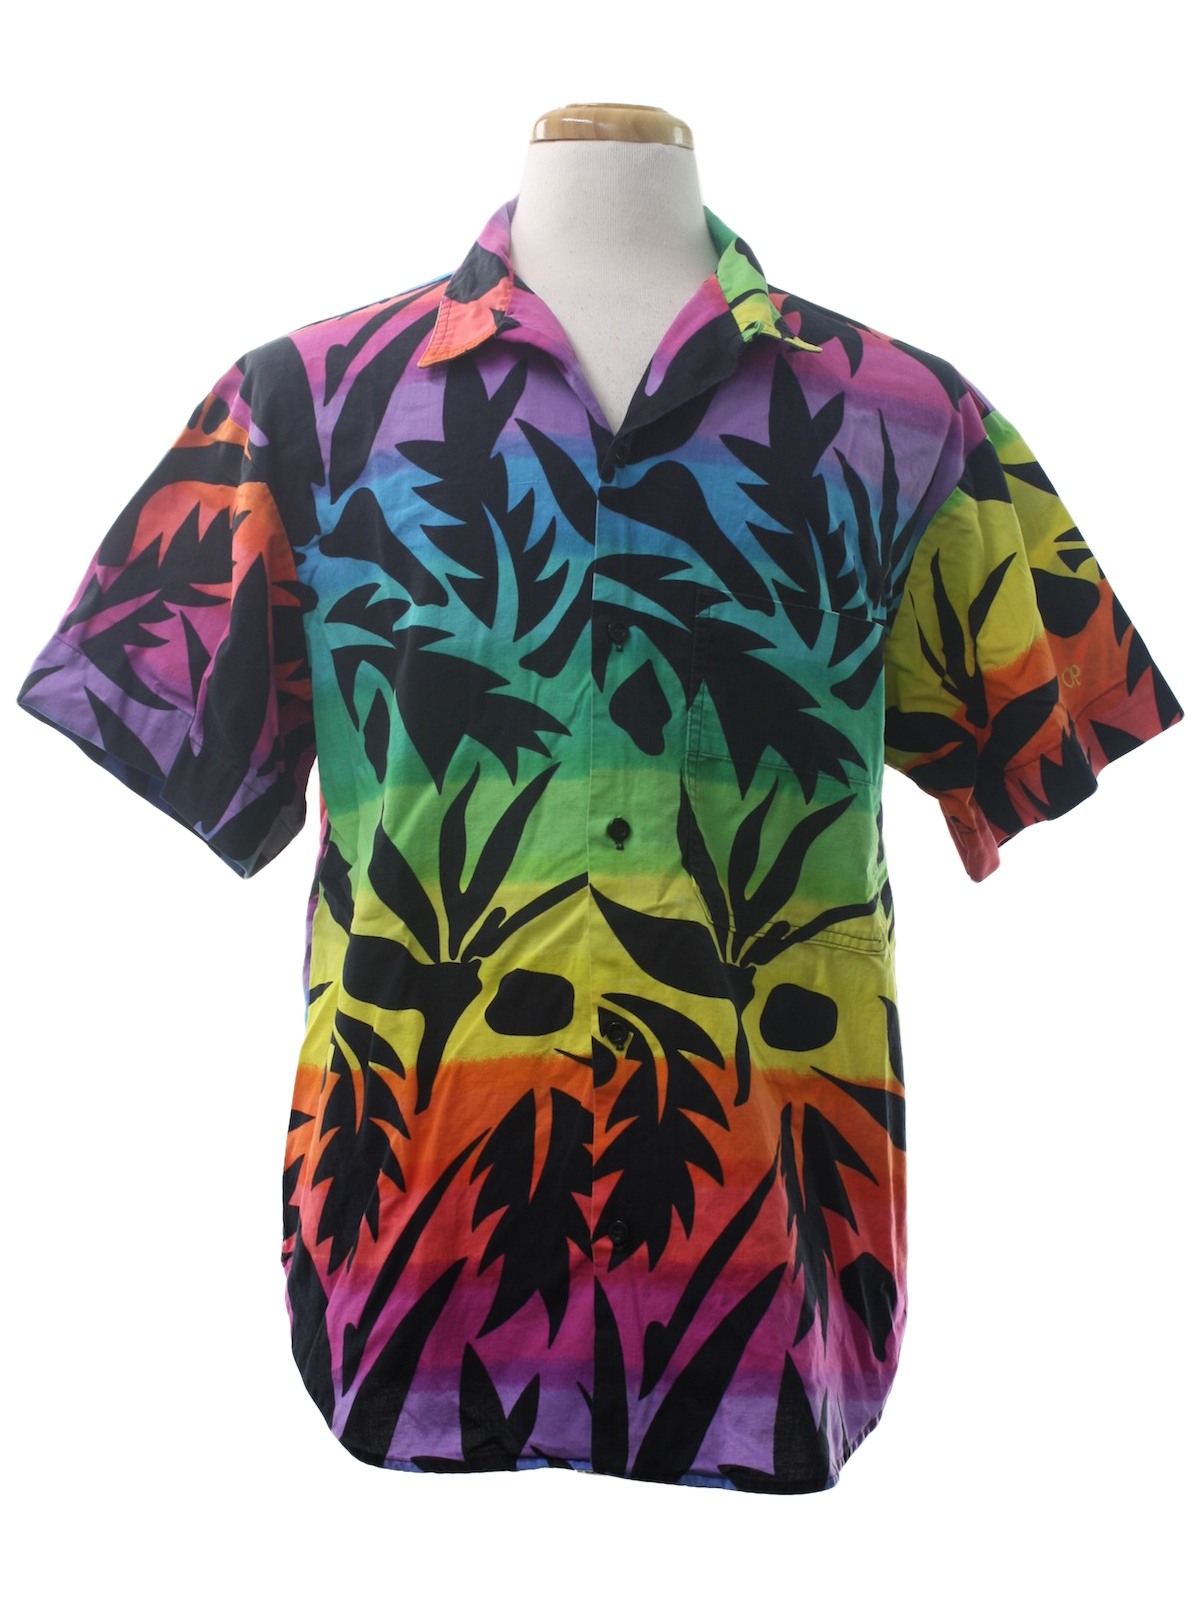 Retro 80's Hawaiian Shirt: Late 80s or early 90s -OP- Mens multi ...